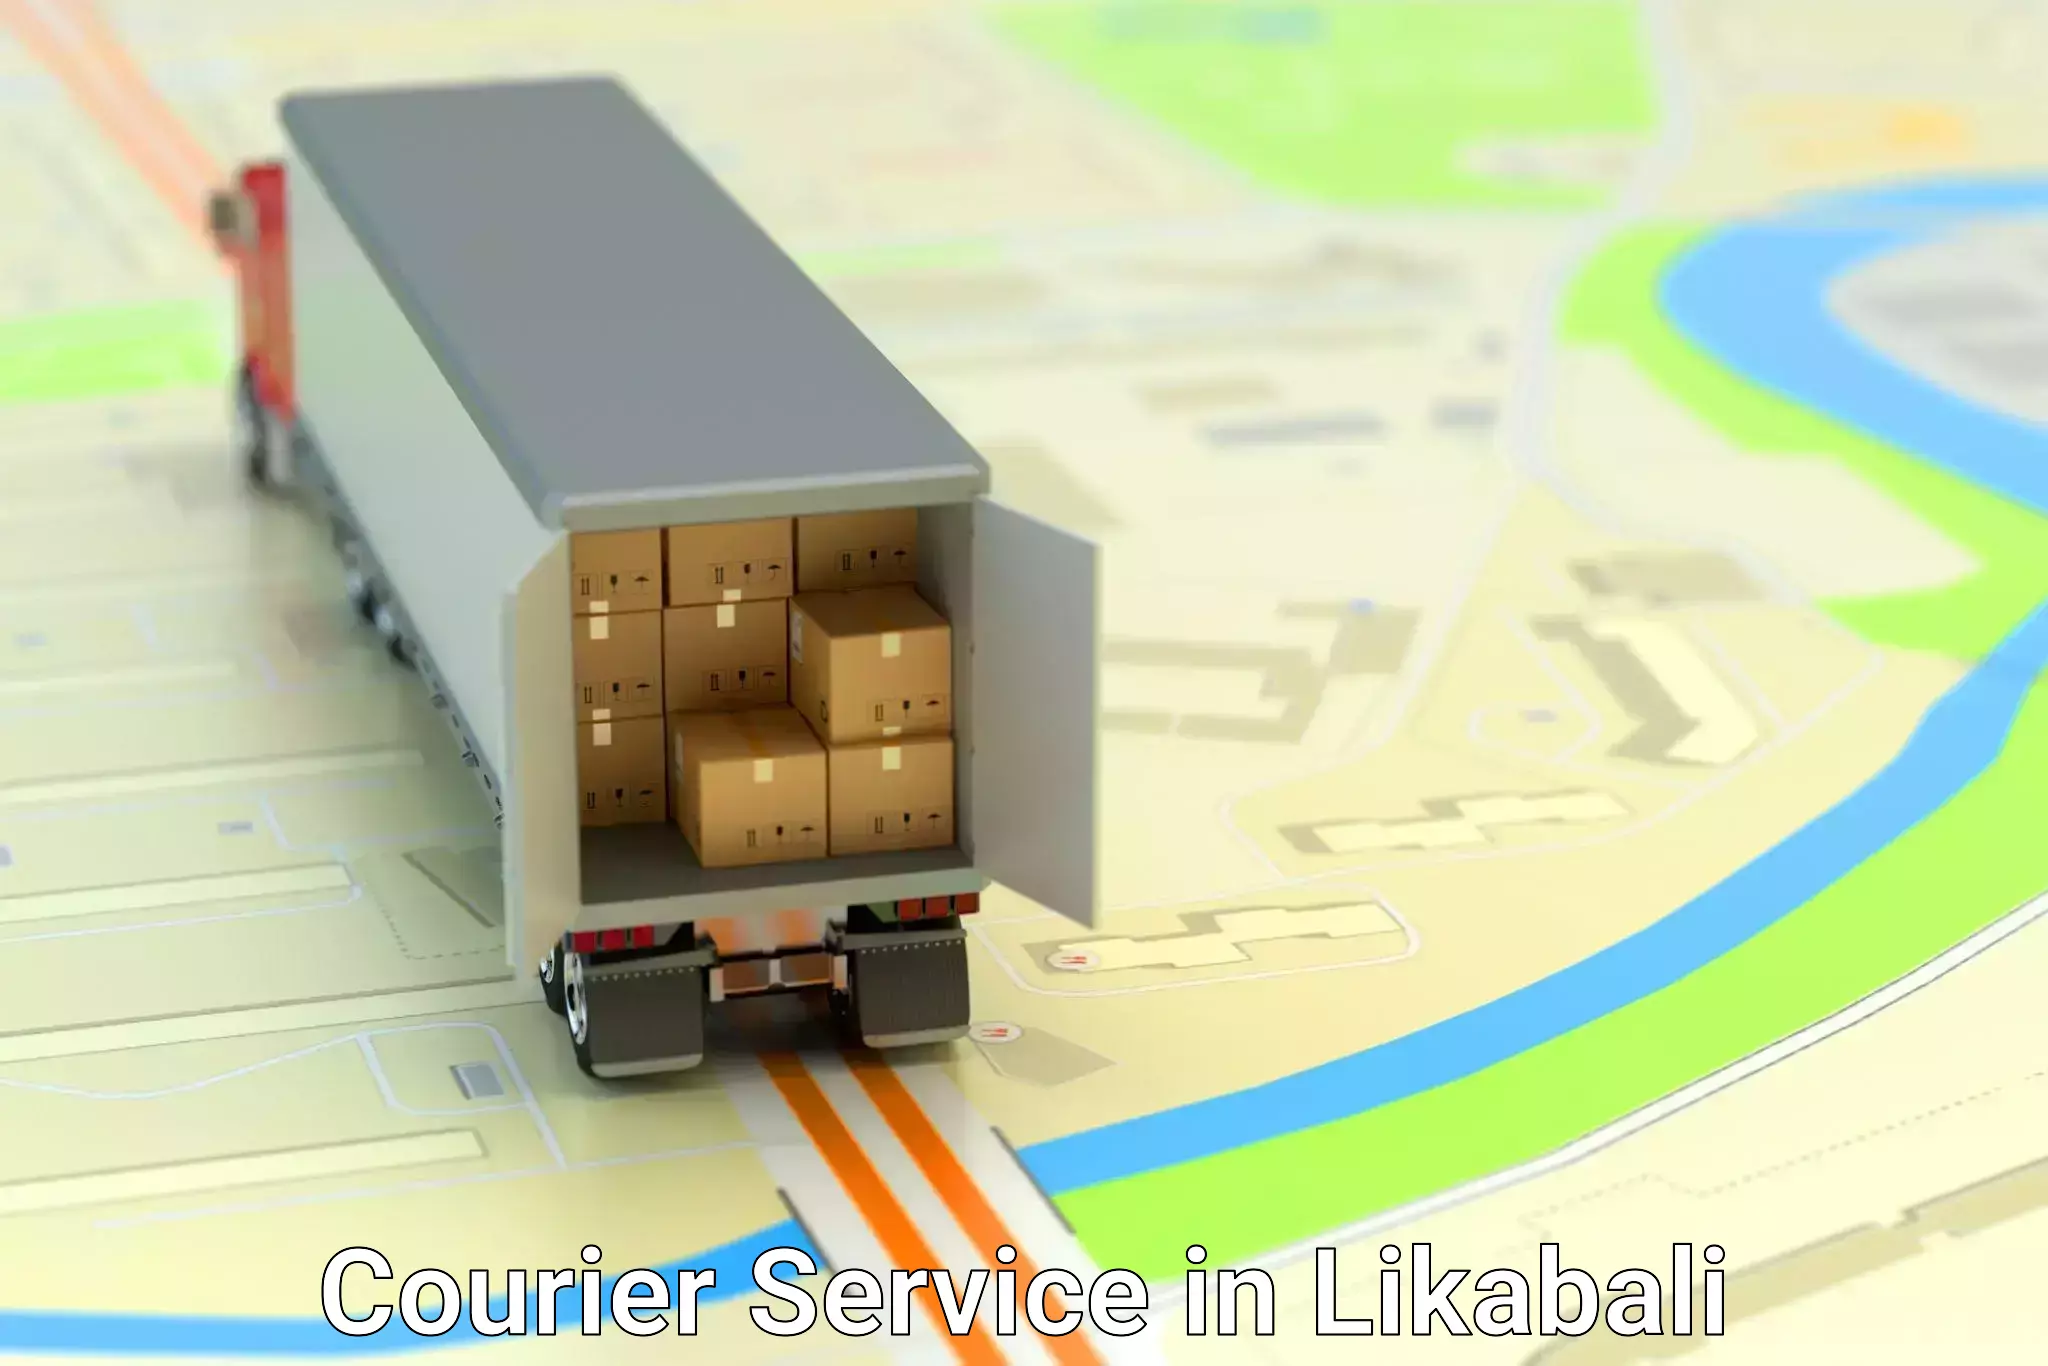 Modern delivery methods in Likabali